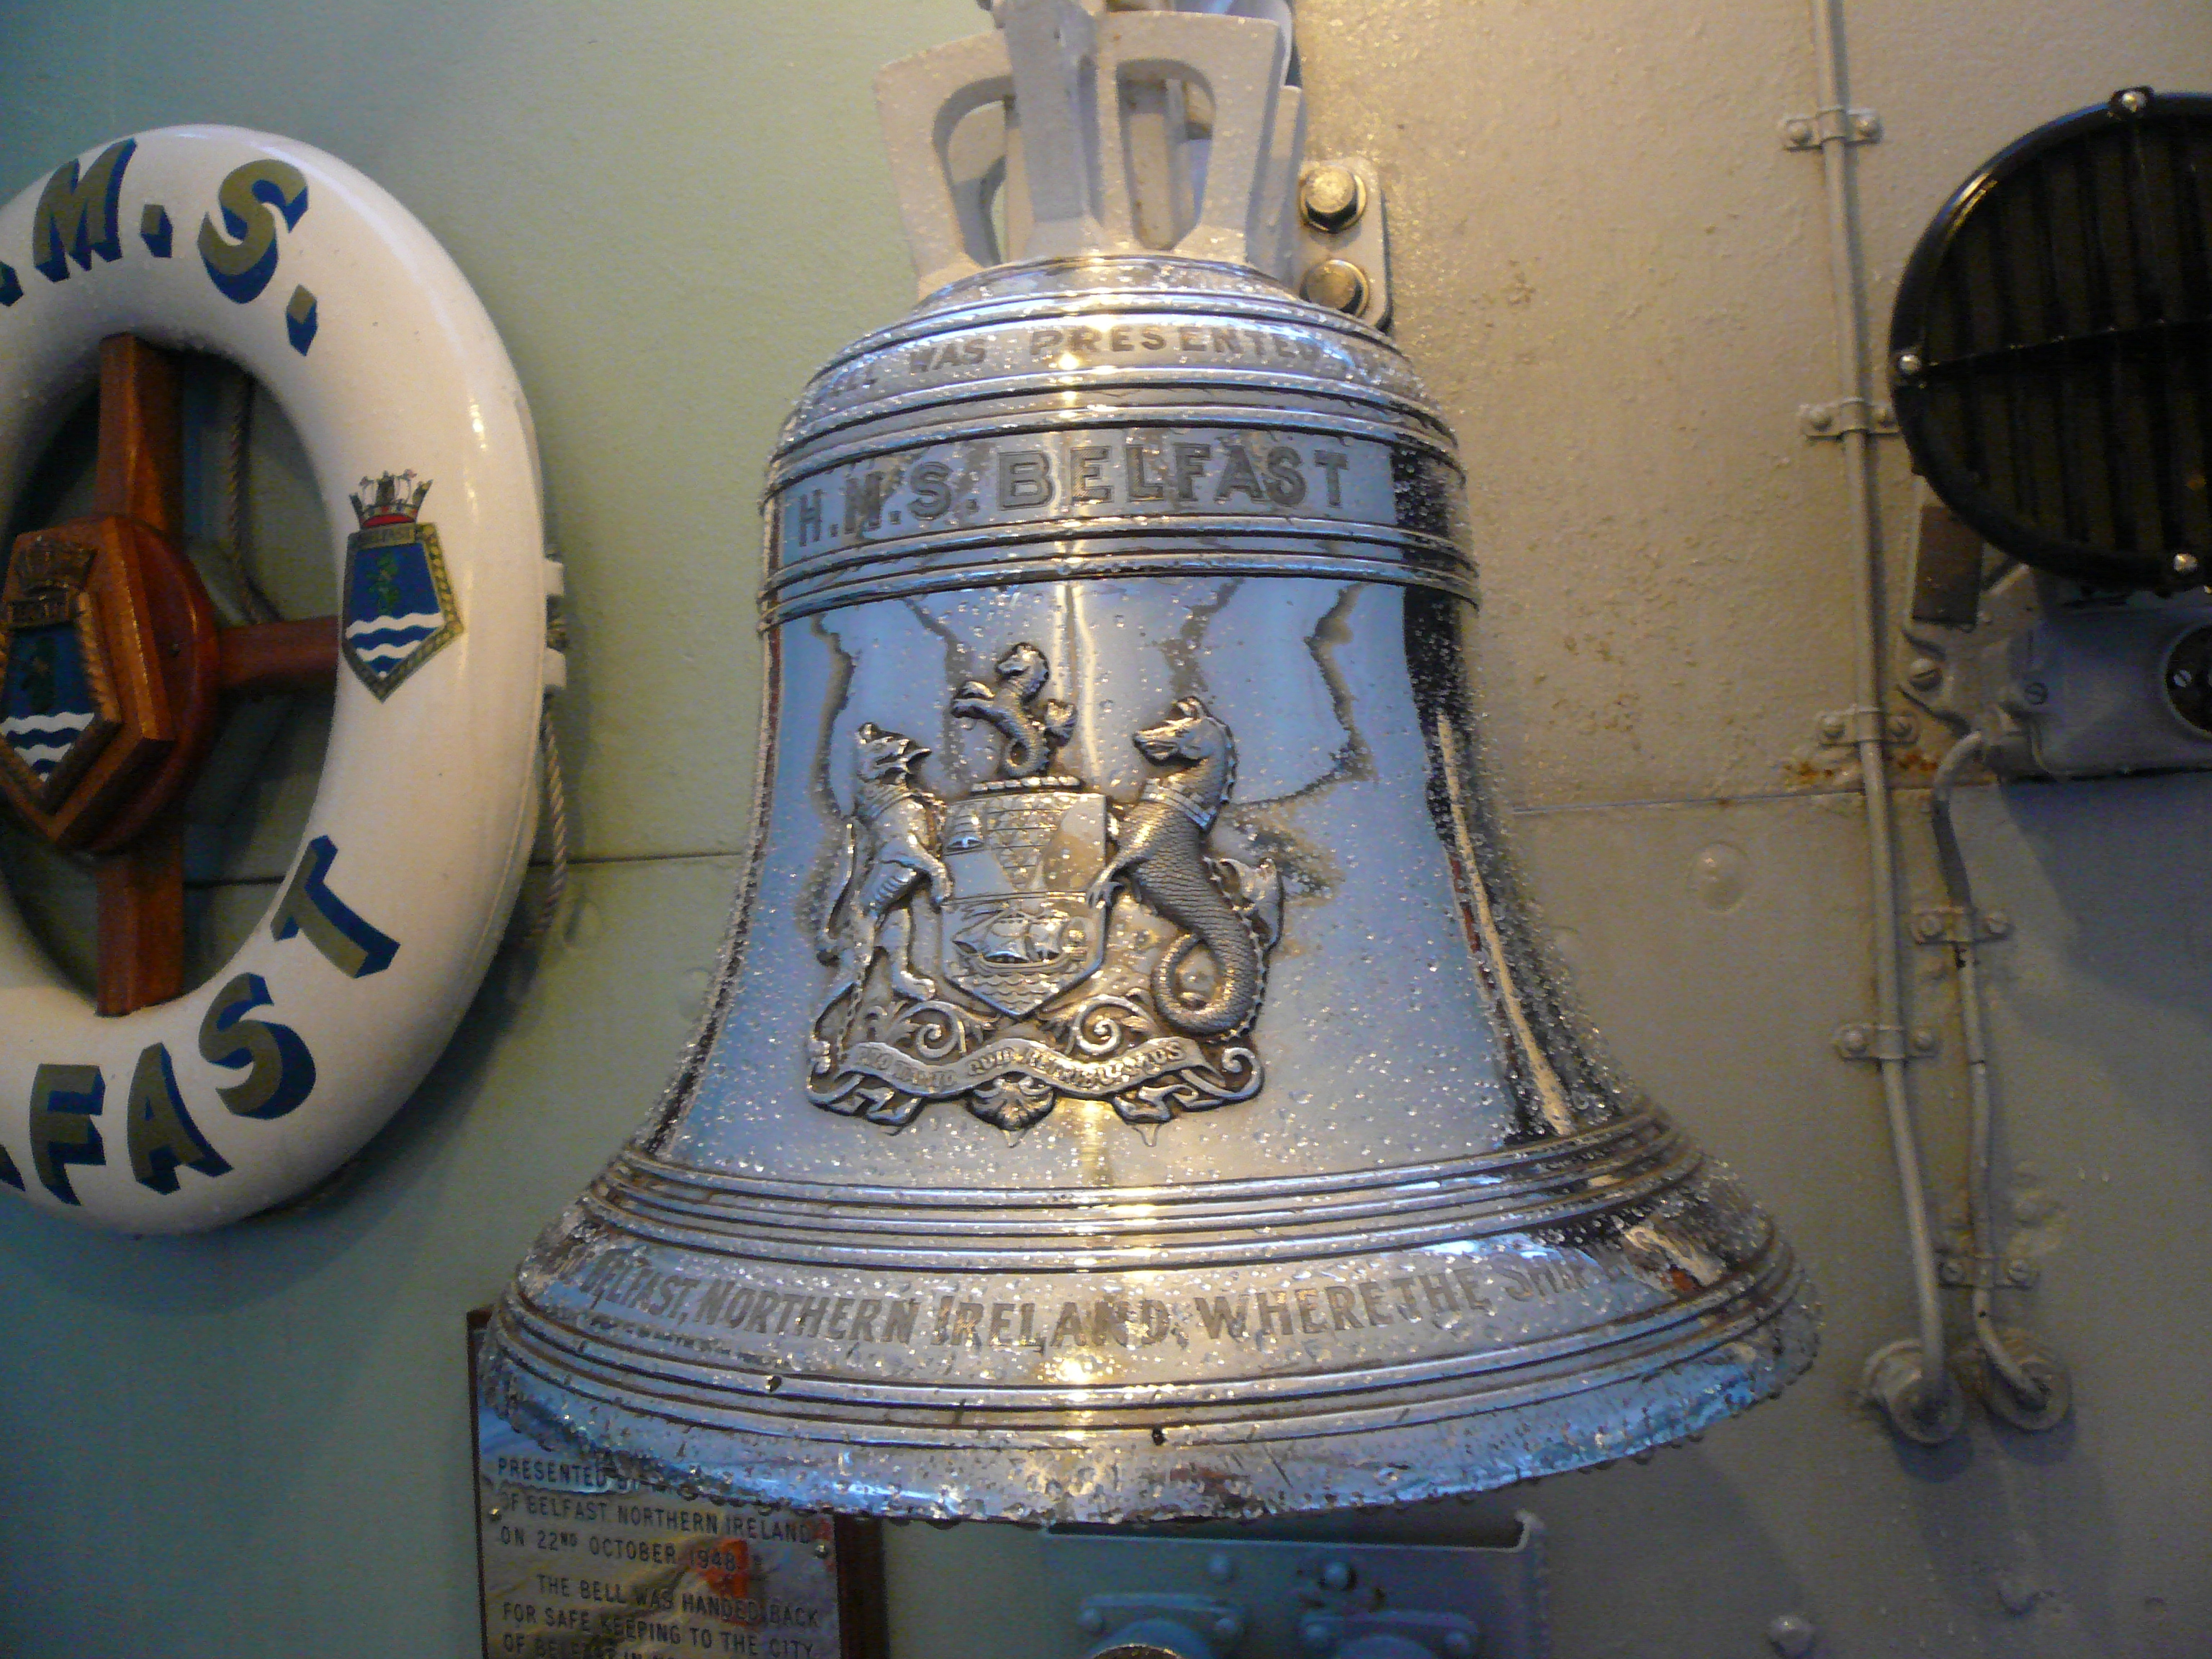 Museum ship HMS Belfast's bell, London, England, United Kingdom, Oct 2010